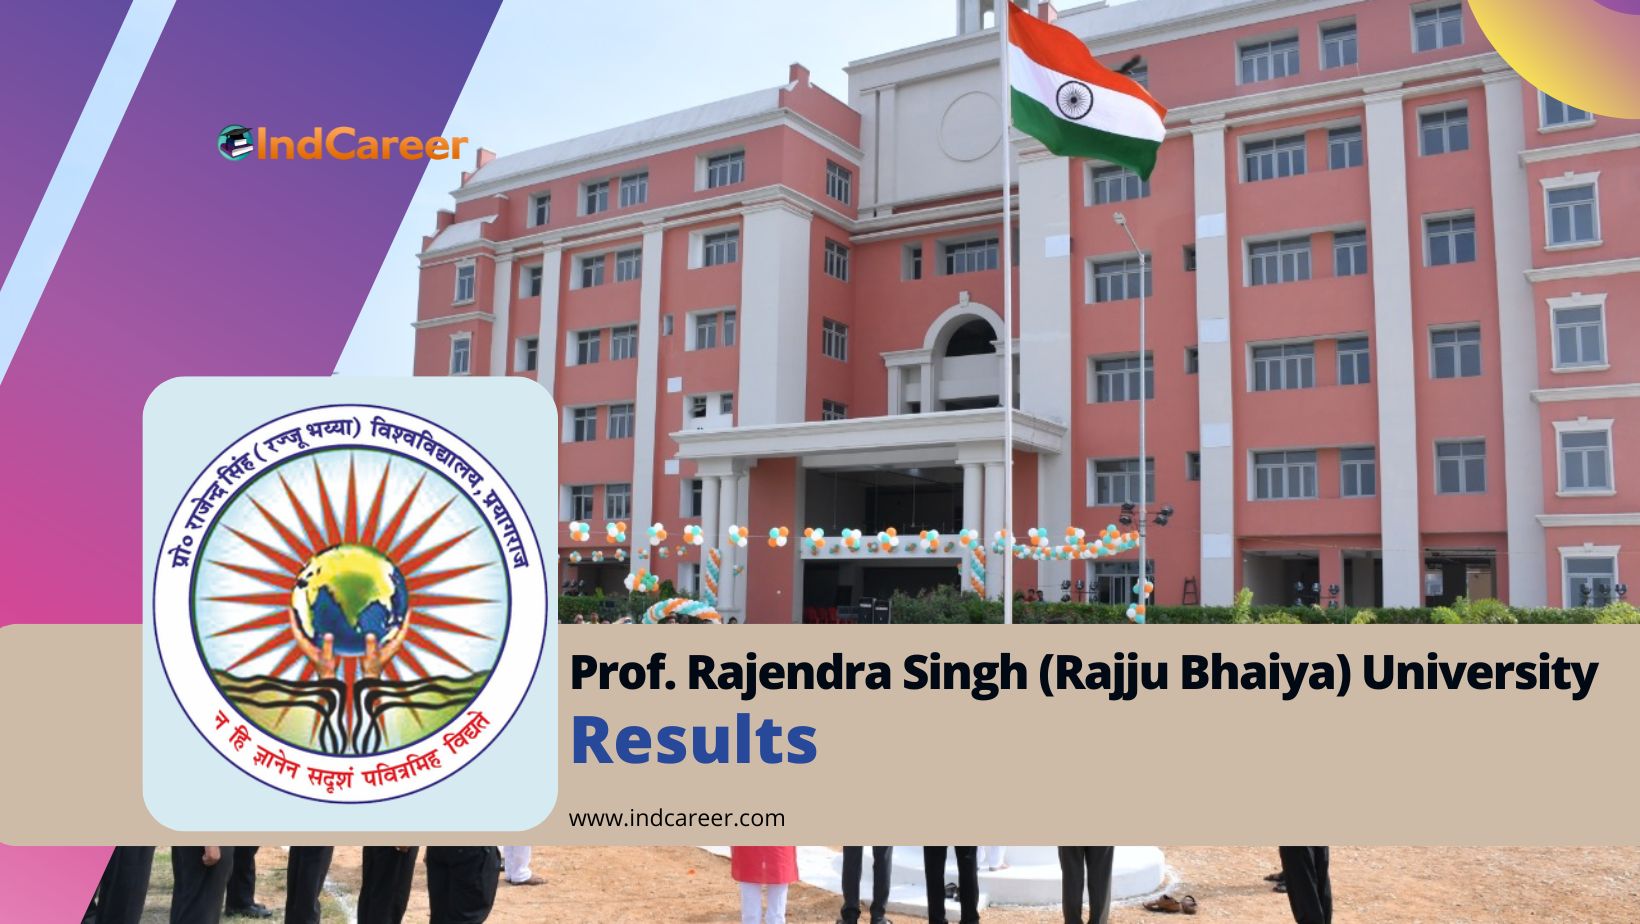 Prof. Rajendra Singh (Rajju Bhaiya) University Results